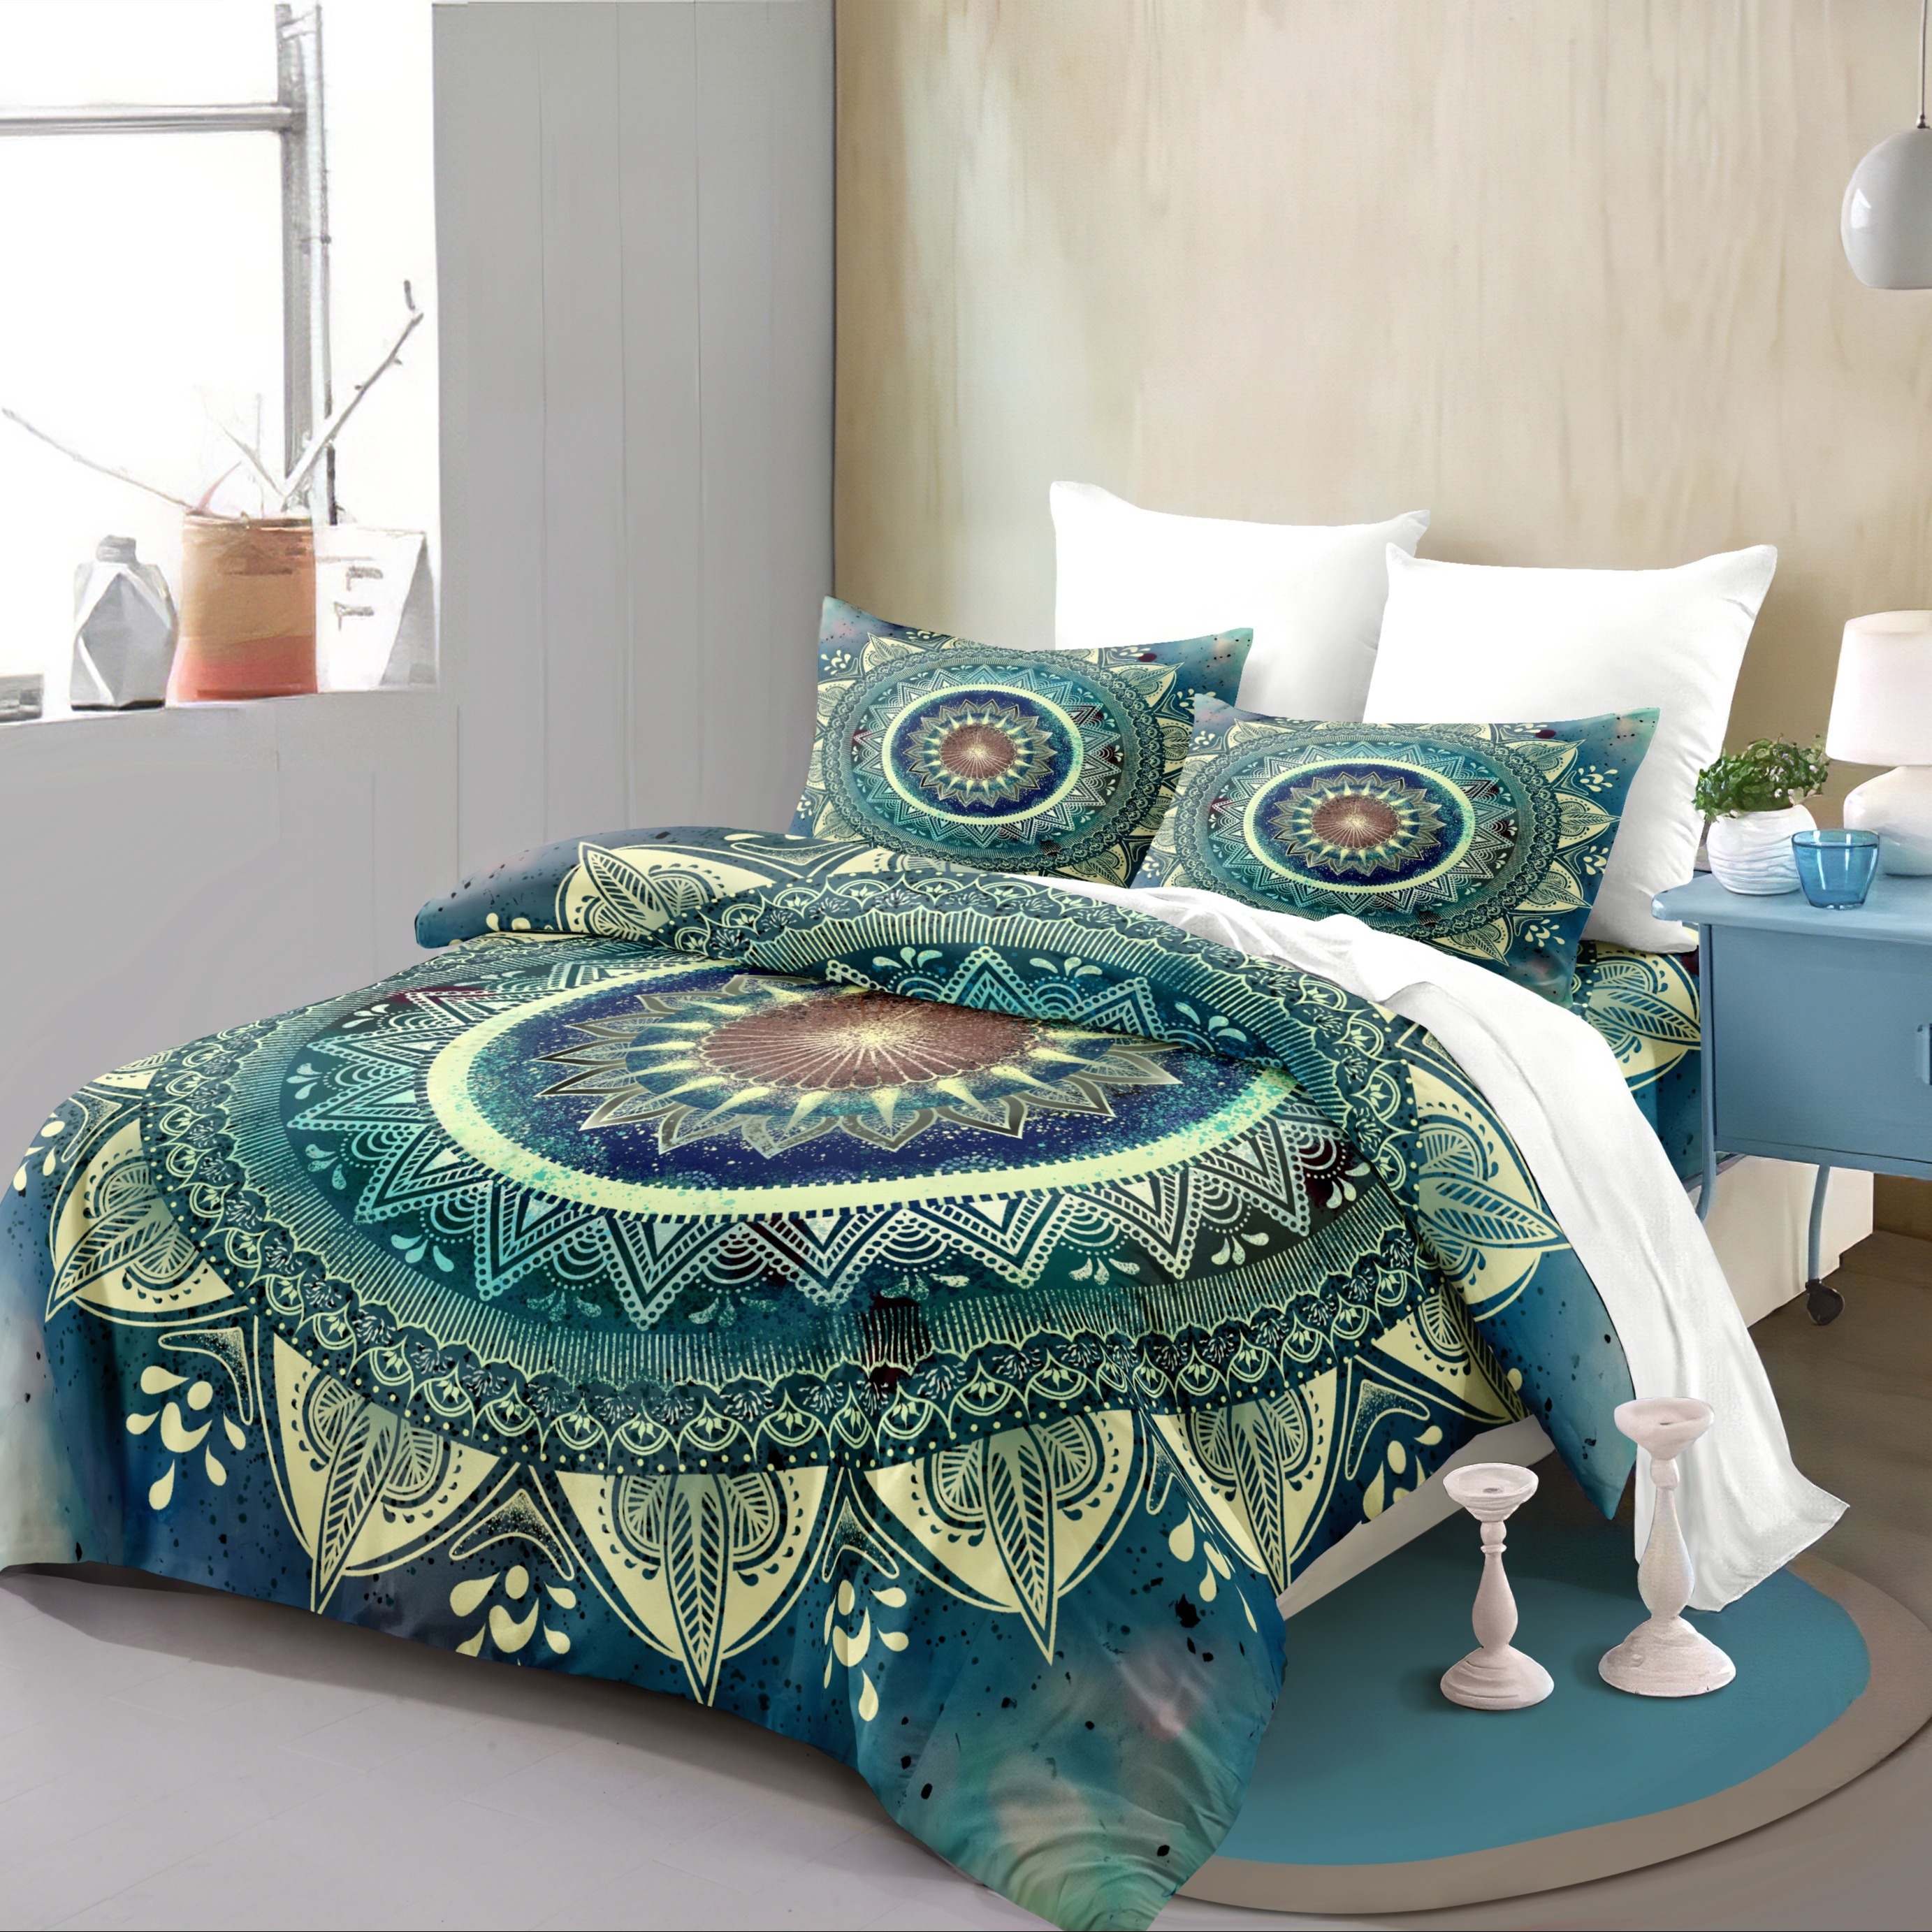 Ropa de cama con mandala en marrón ocre 200 x 220 cm, funda nórdica  bohemia, ropa de cama india de 100% algodón, cosida a mano con telas de  mandala -  España